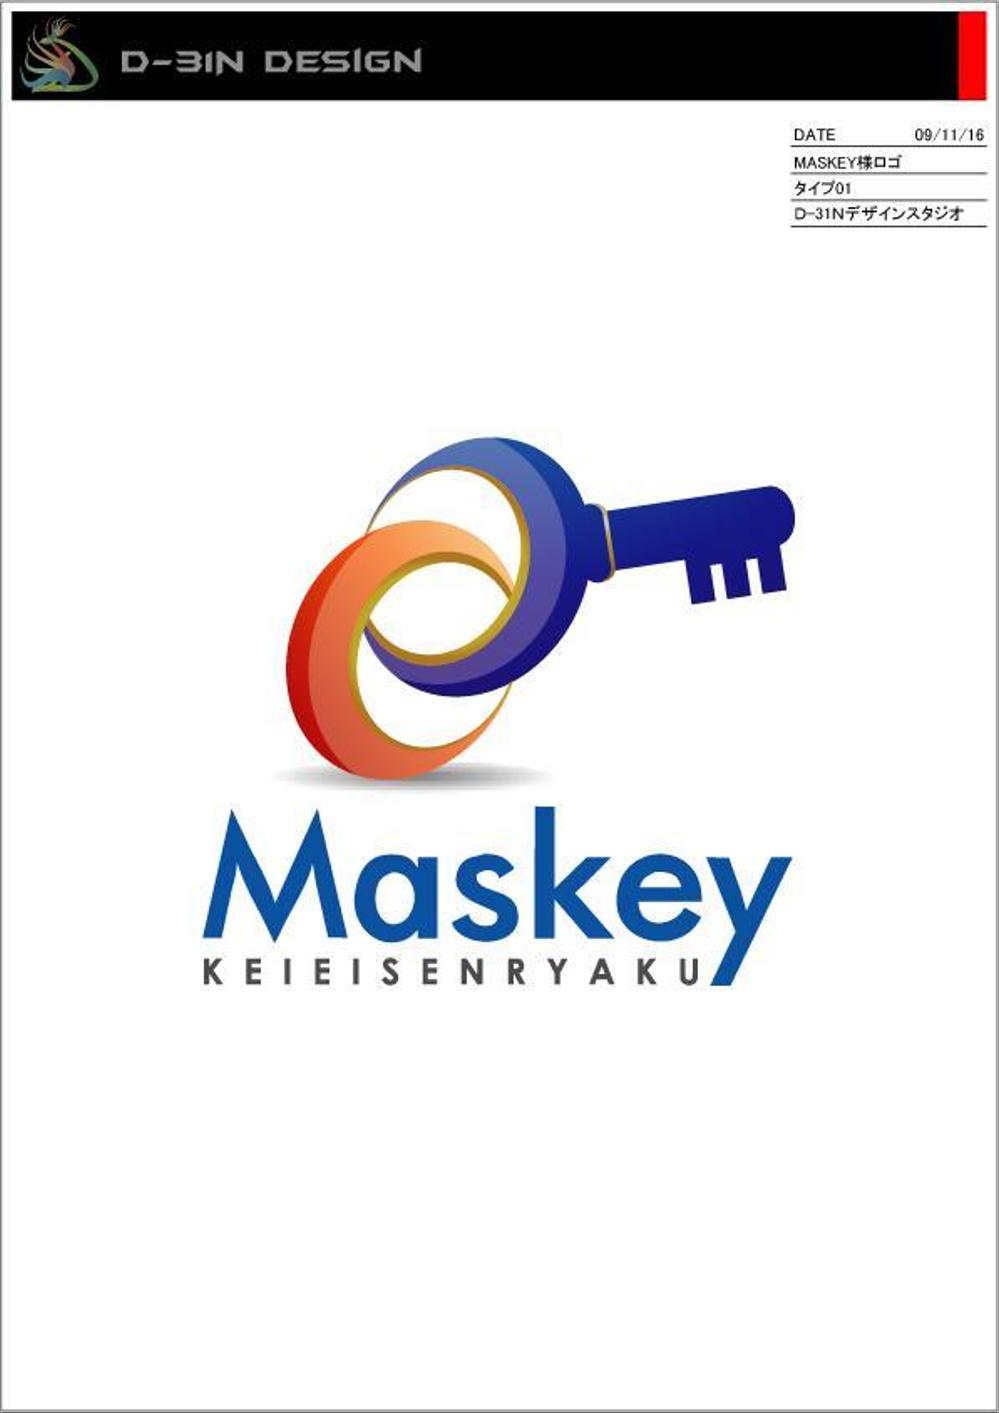 maskey-logo01.jpg